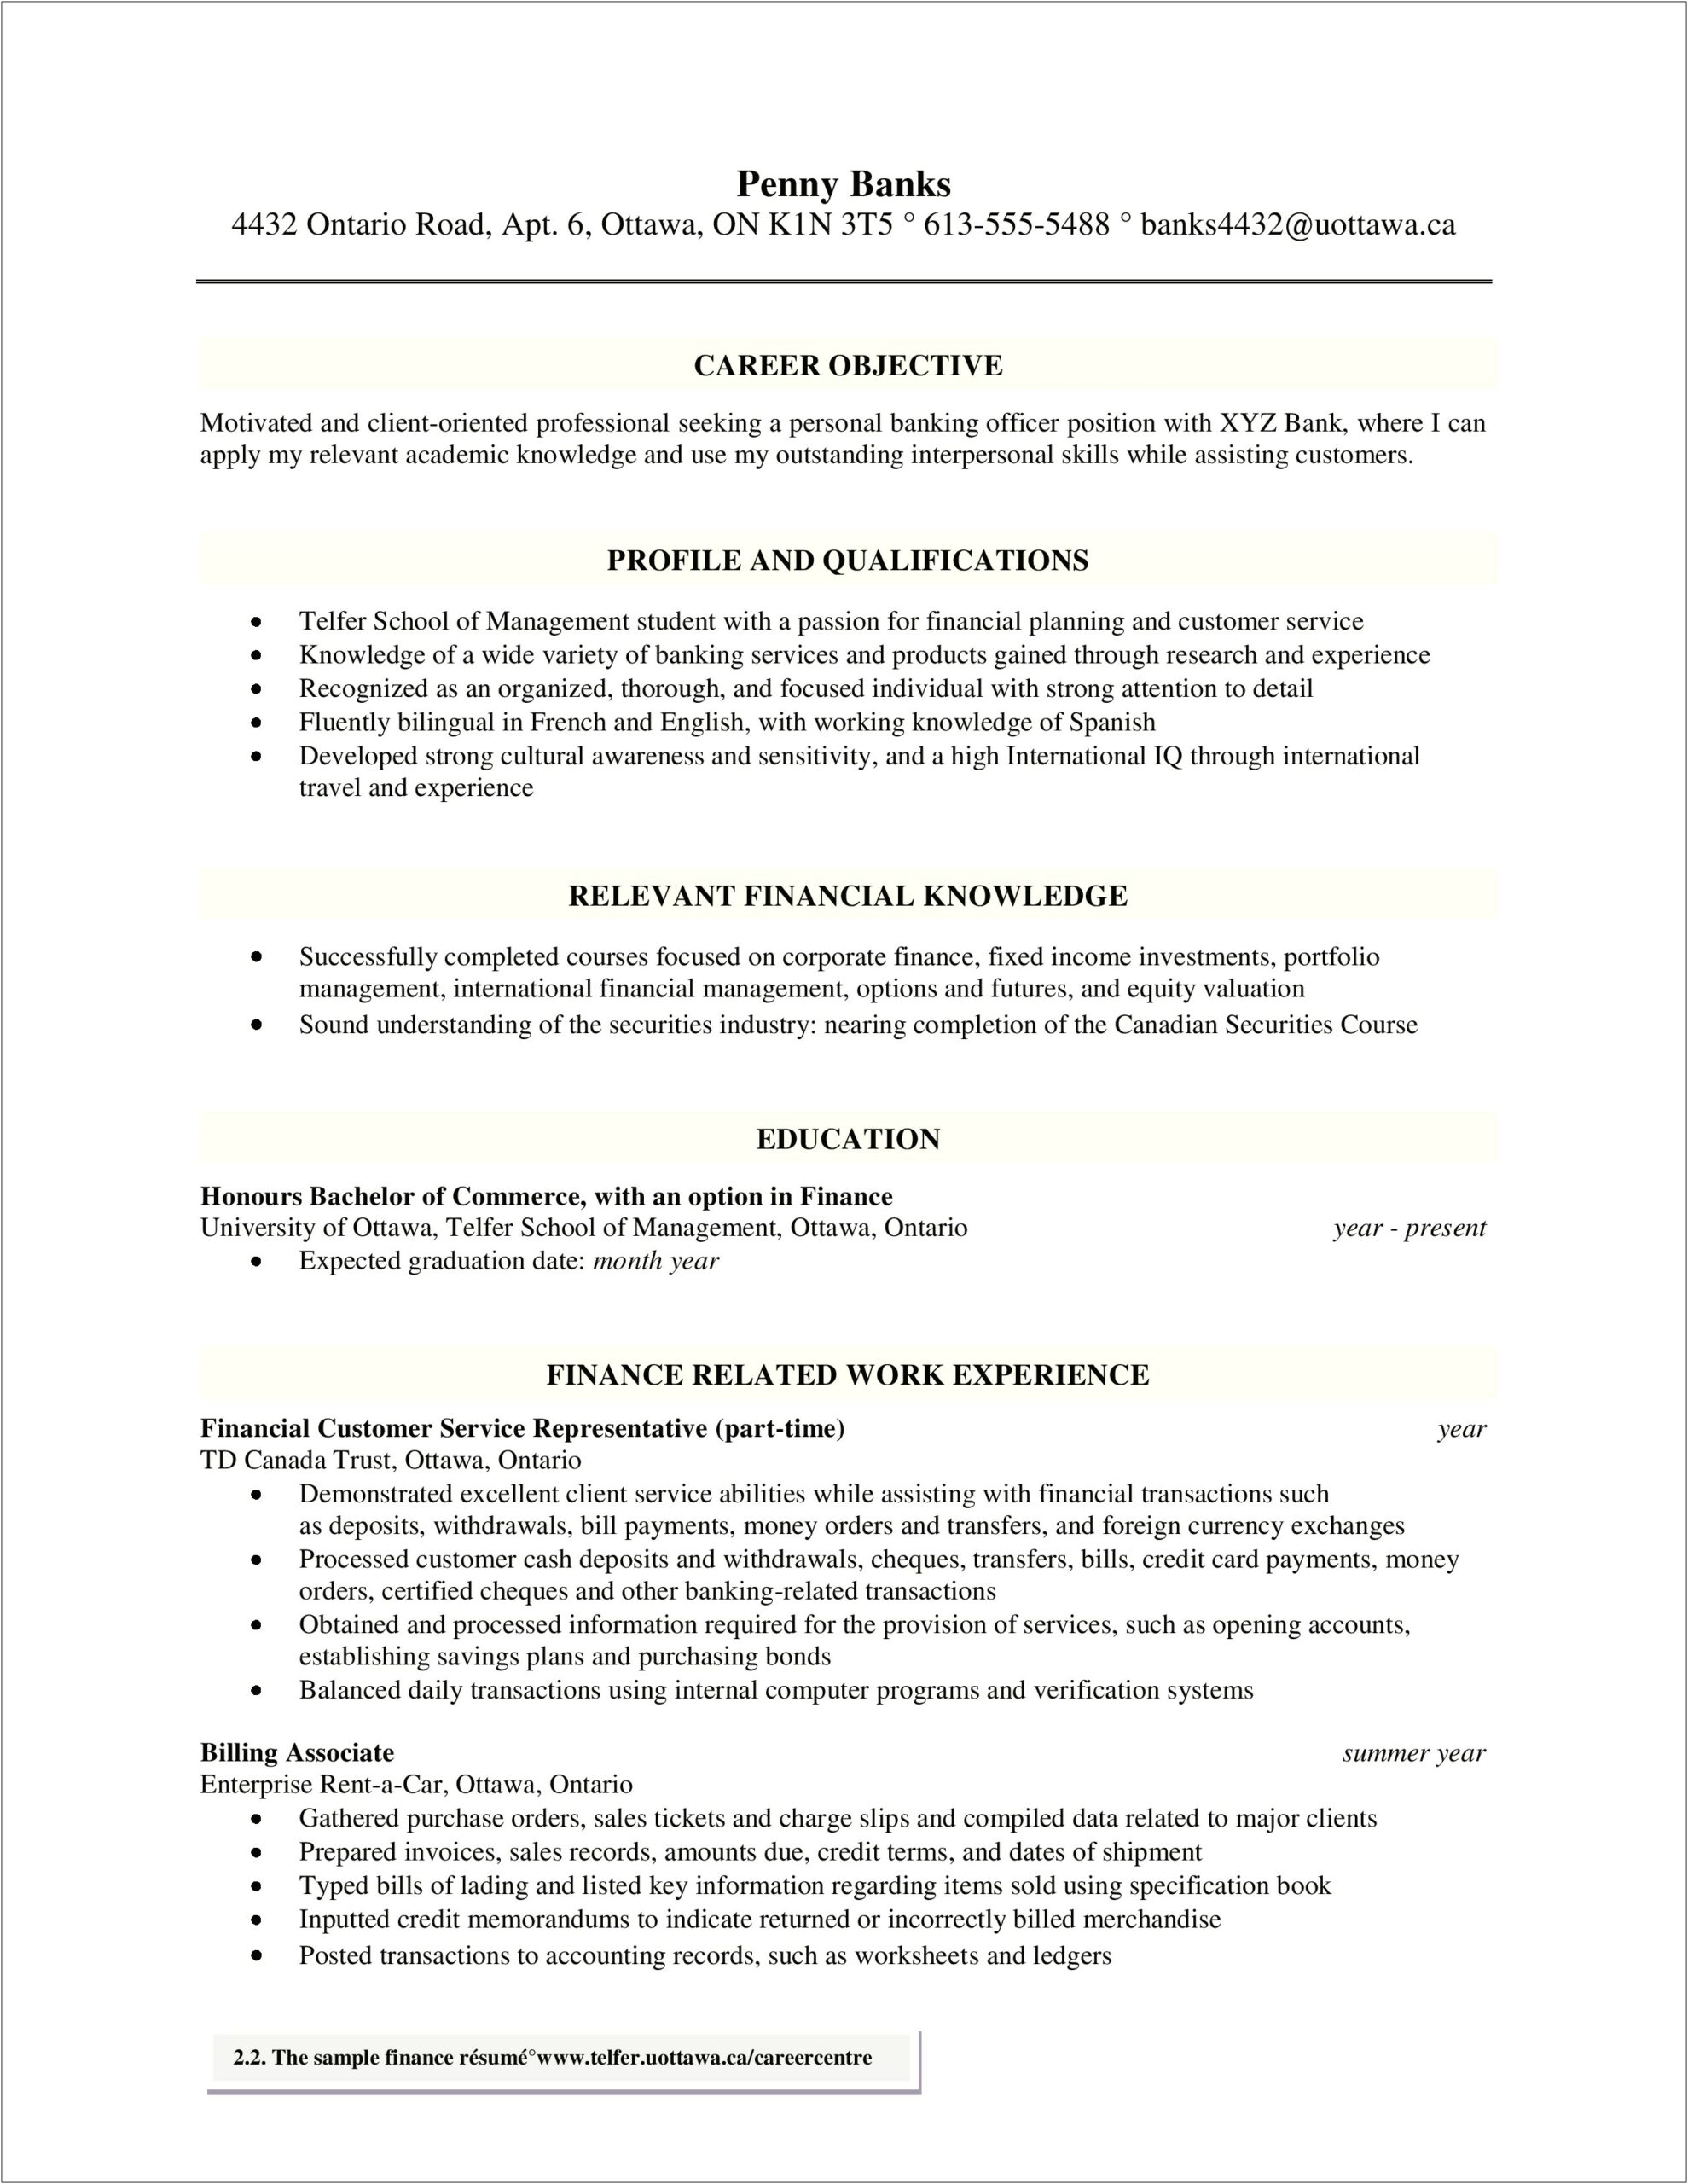 Administrative Ticket Retailer Job Resume Description